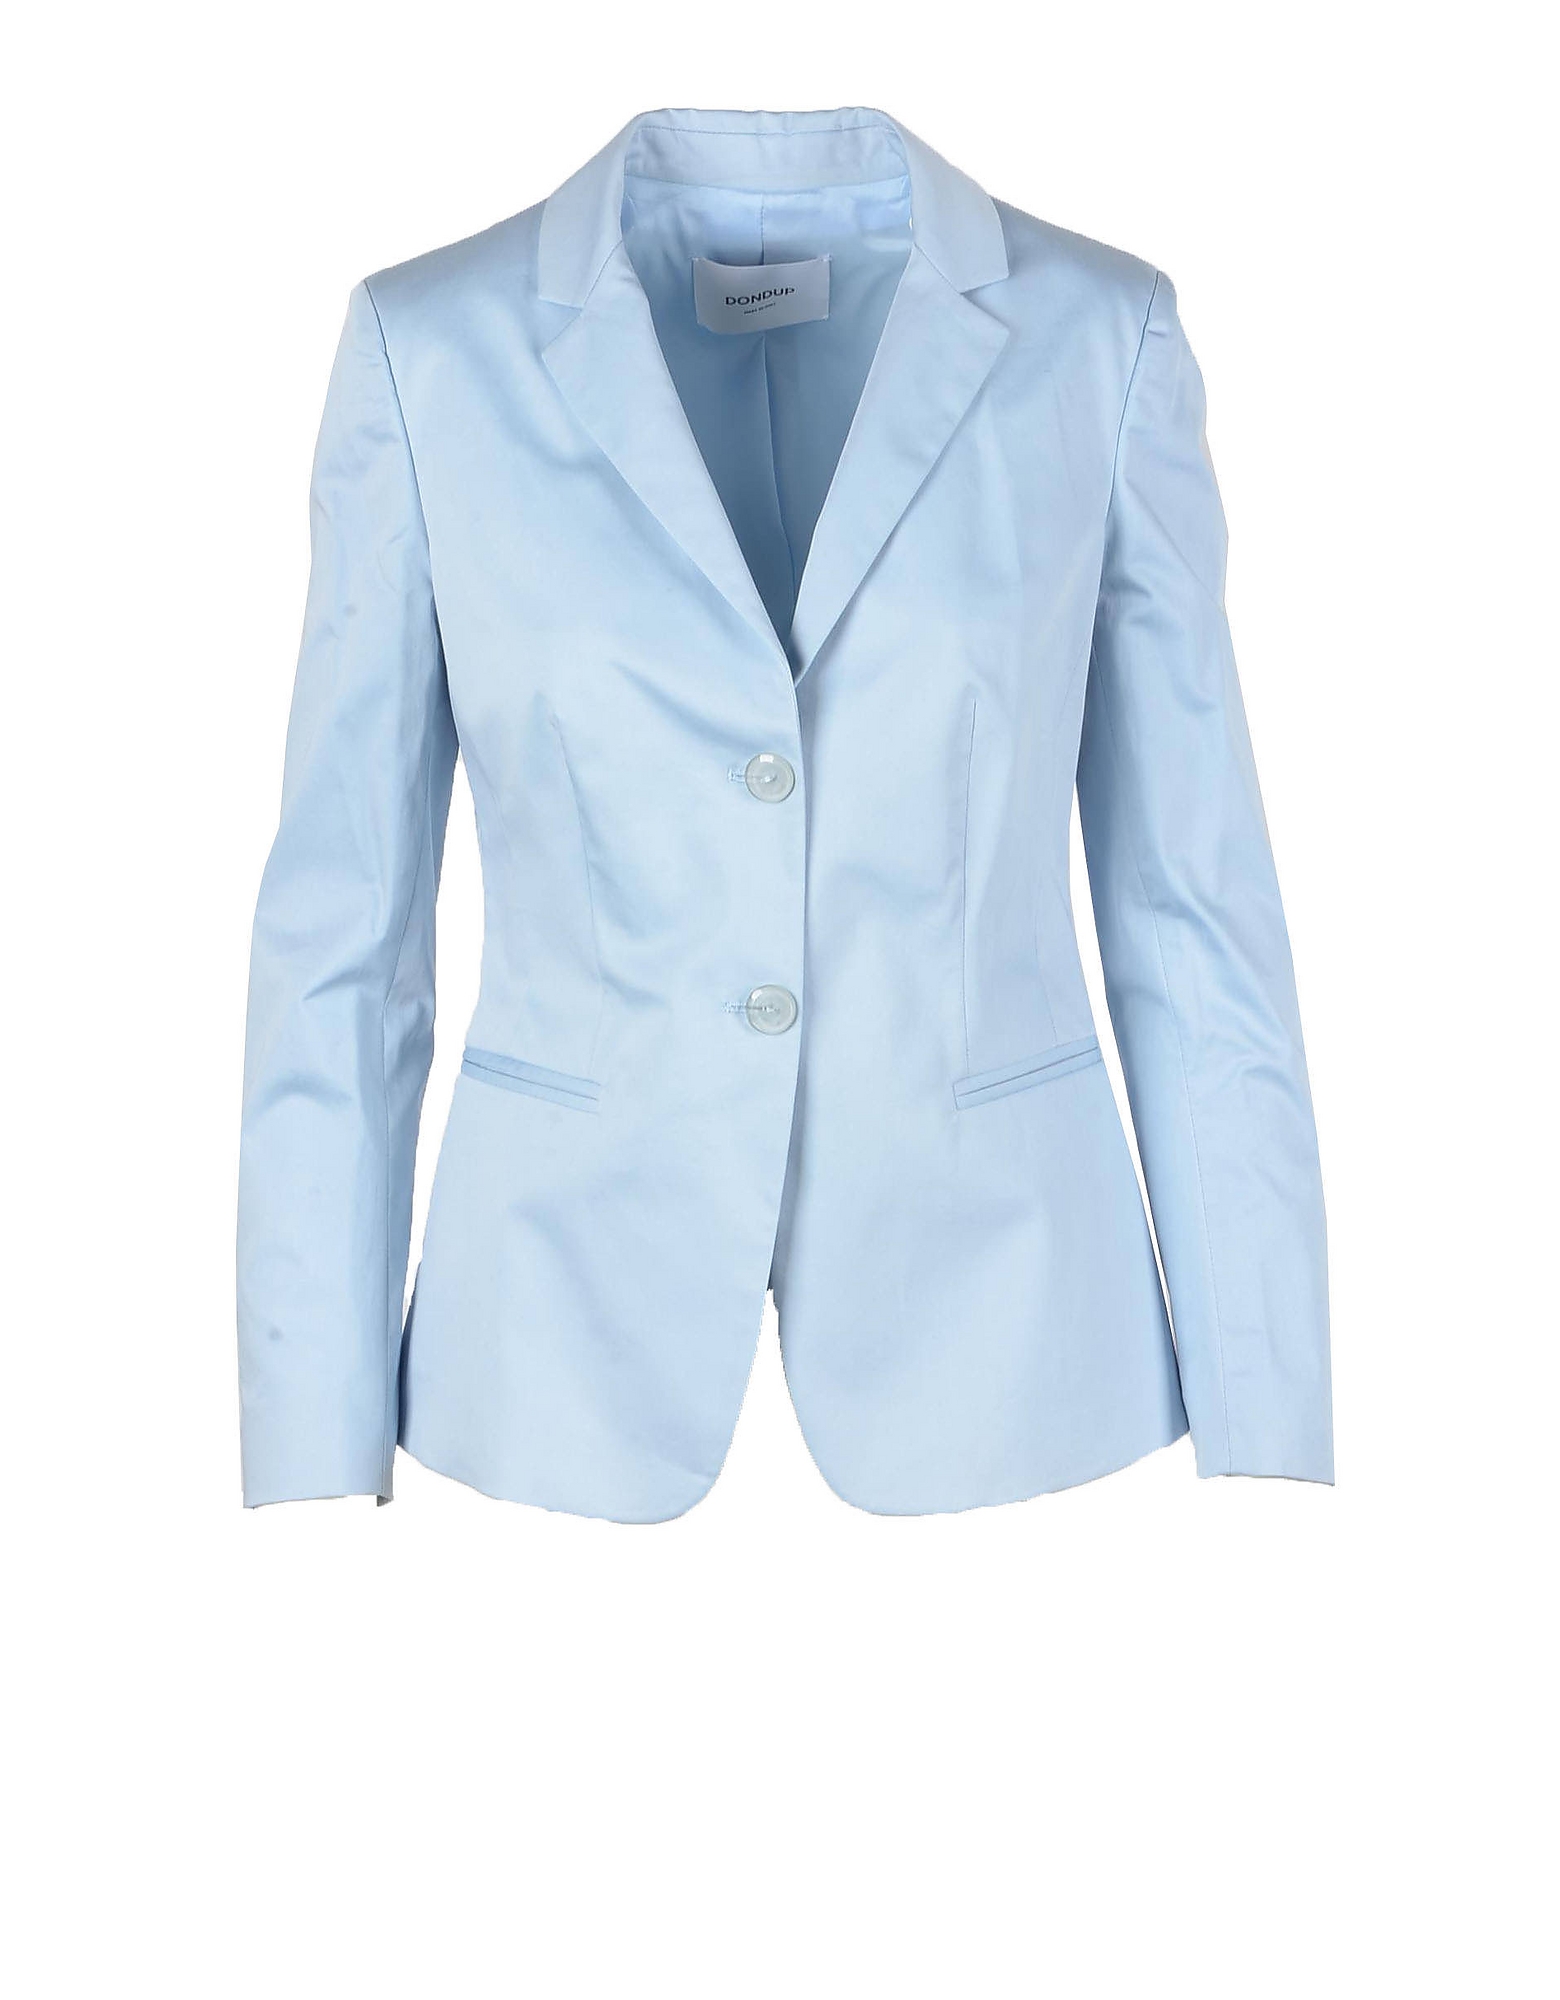 Dondup  Coats & Jackets Women's Sky Blue Blazer